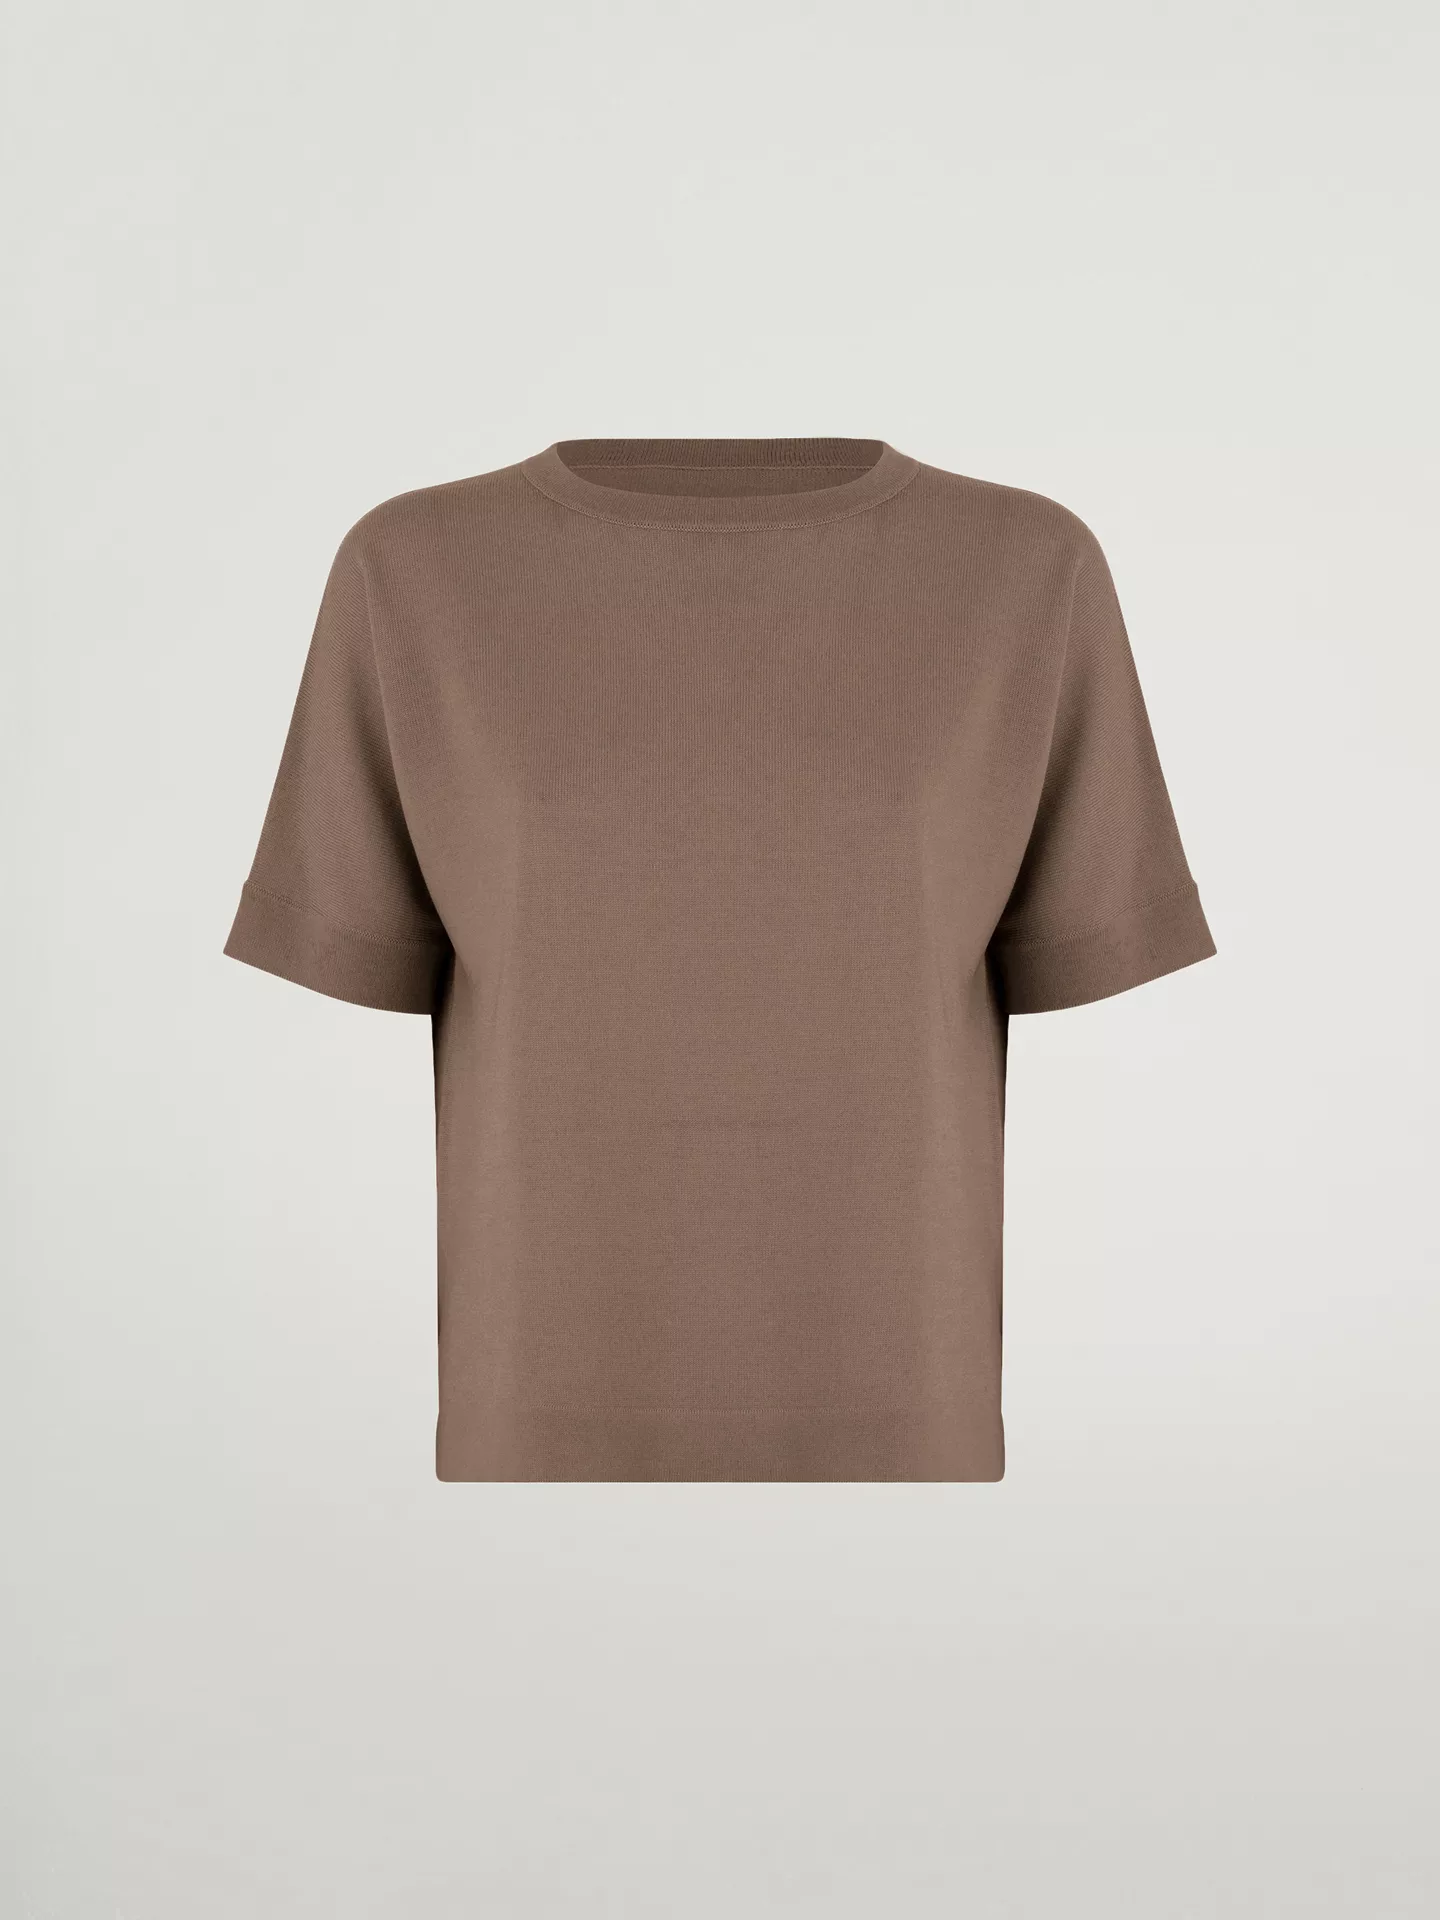 Wolford - Merino Blend Top Short Sleeves, Frau, beige mele, Größe: S günstig online kaufen